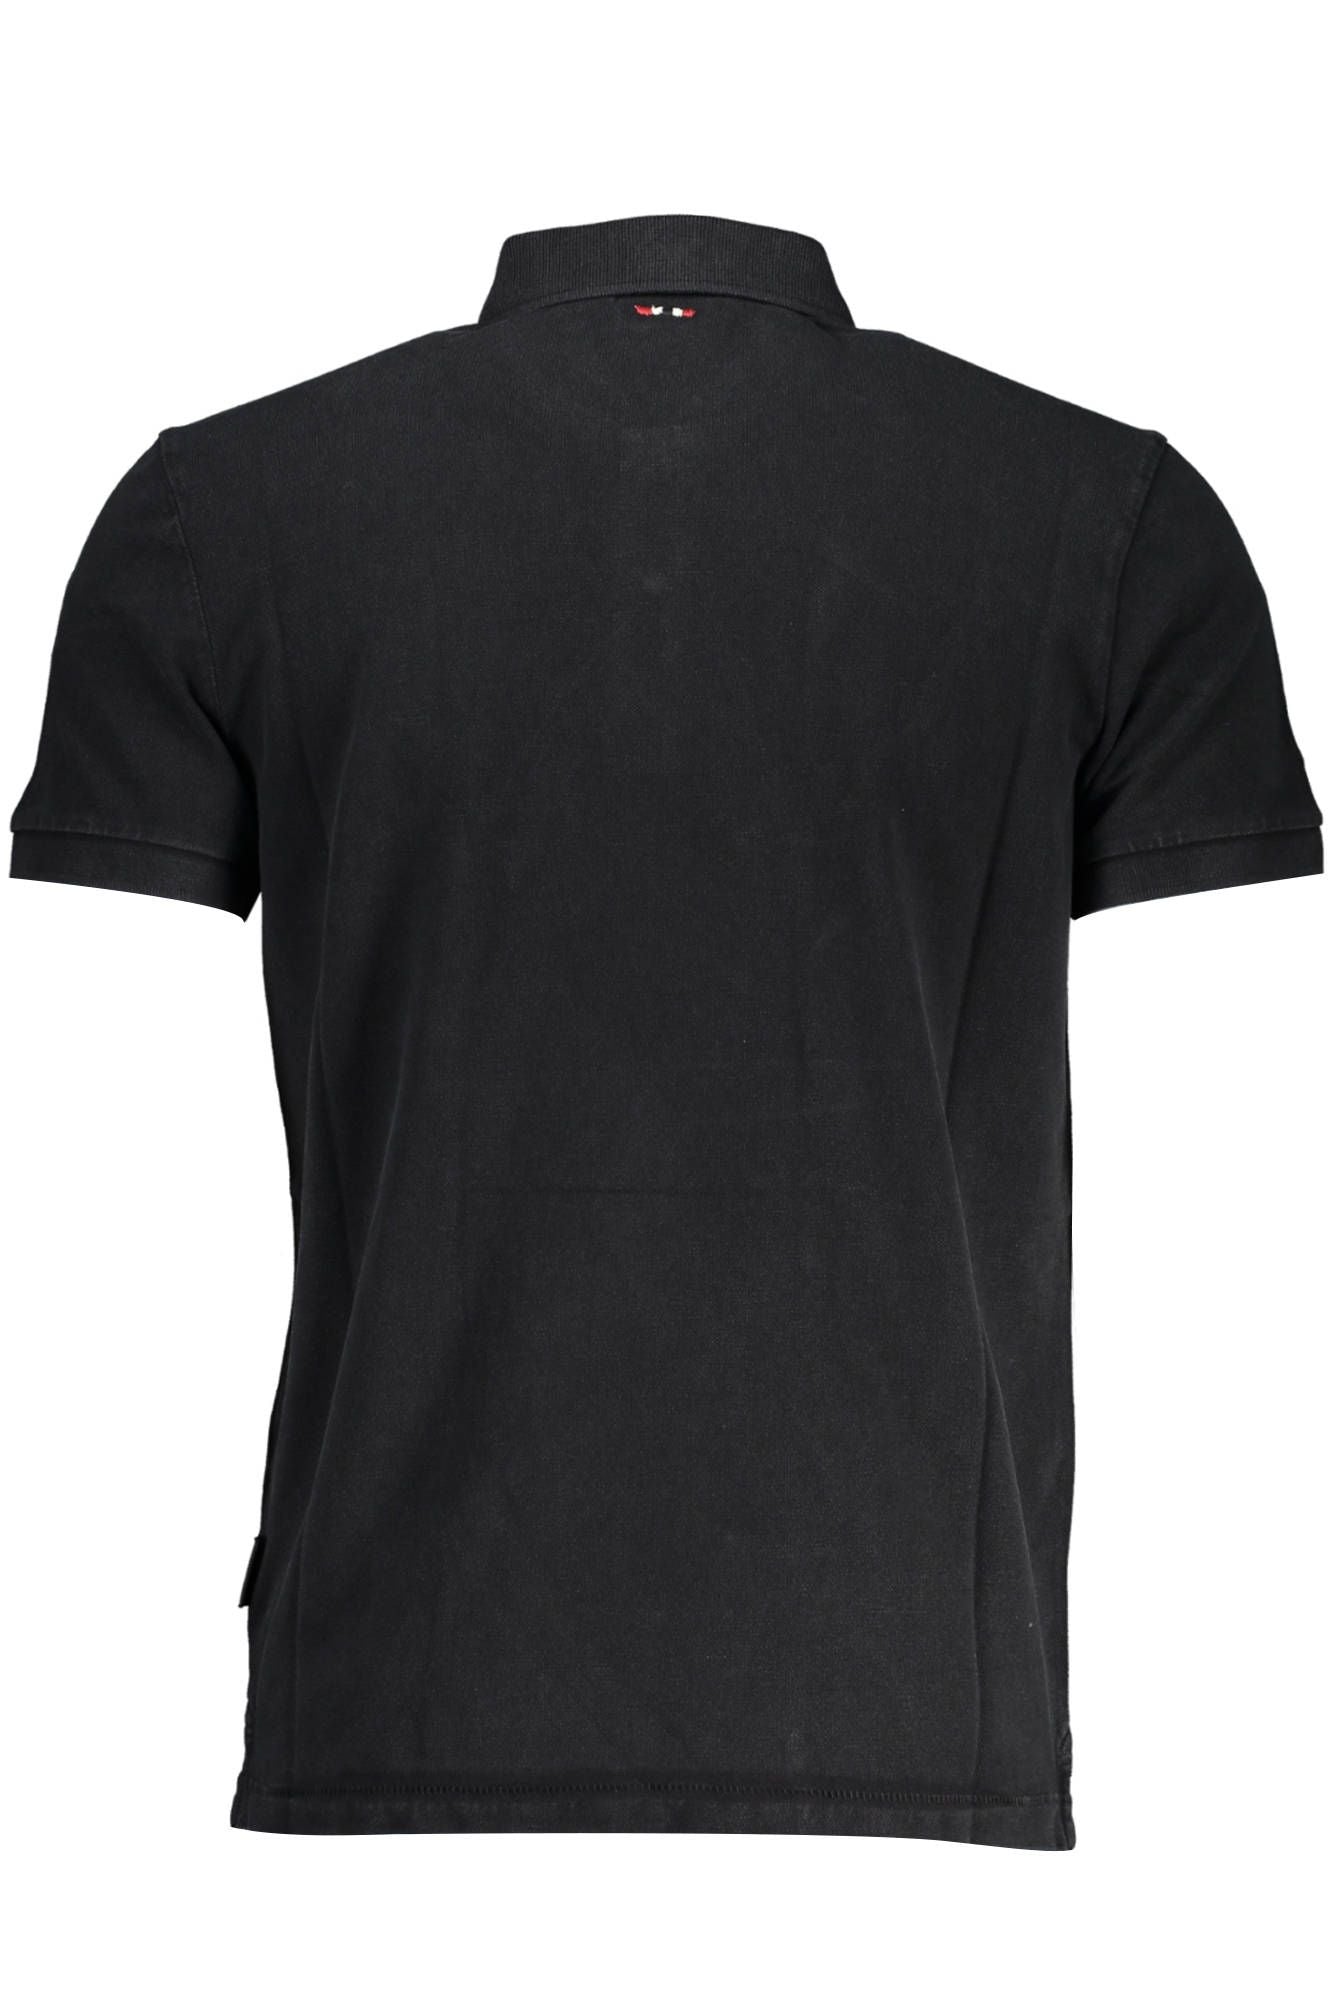 Napapijri Classic Black Embroidered Polo Shirt